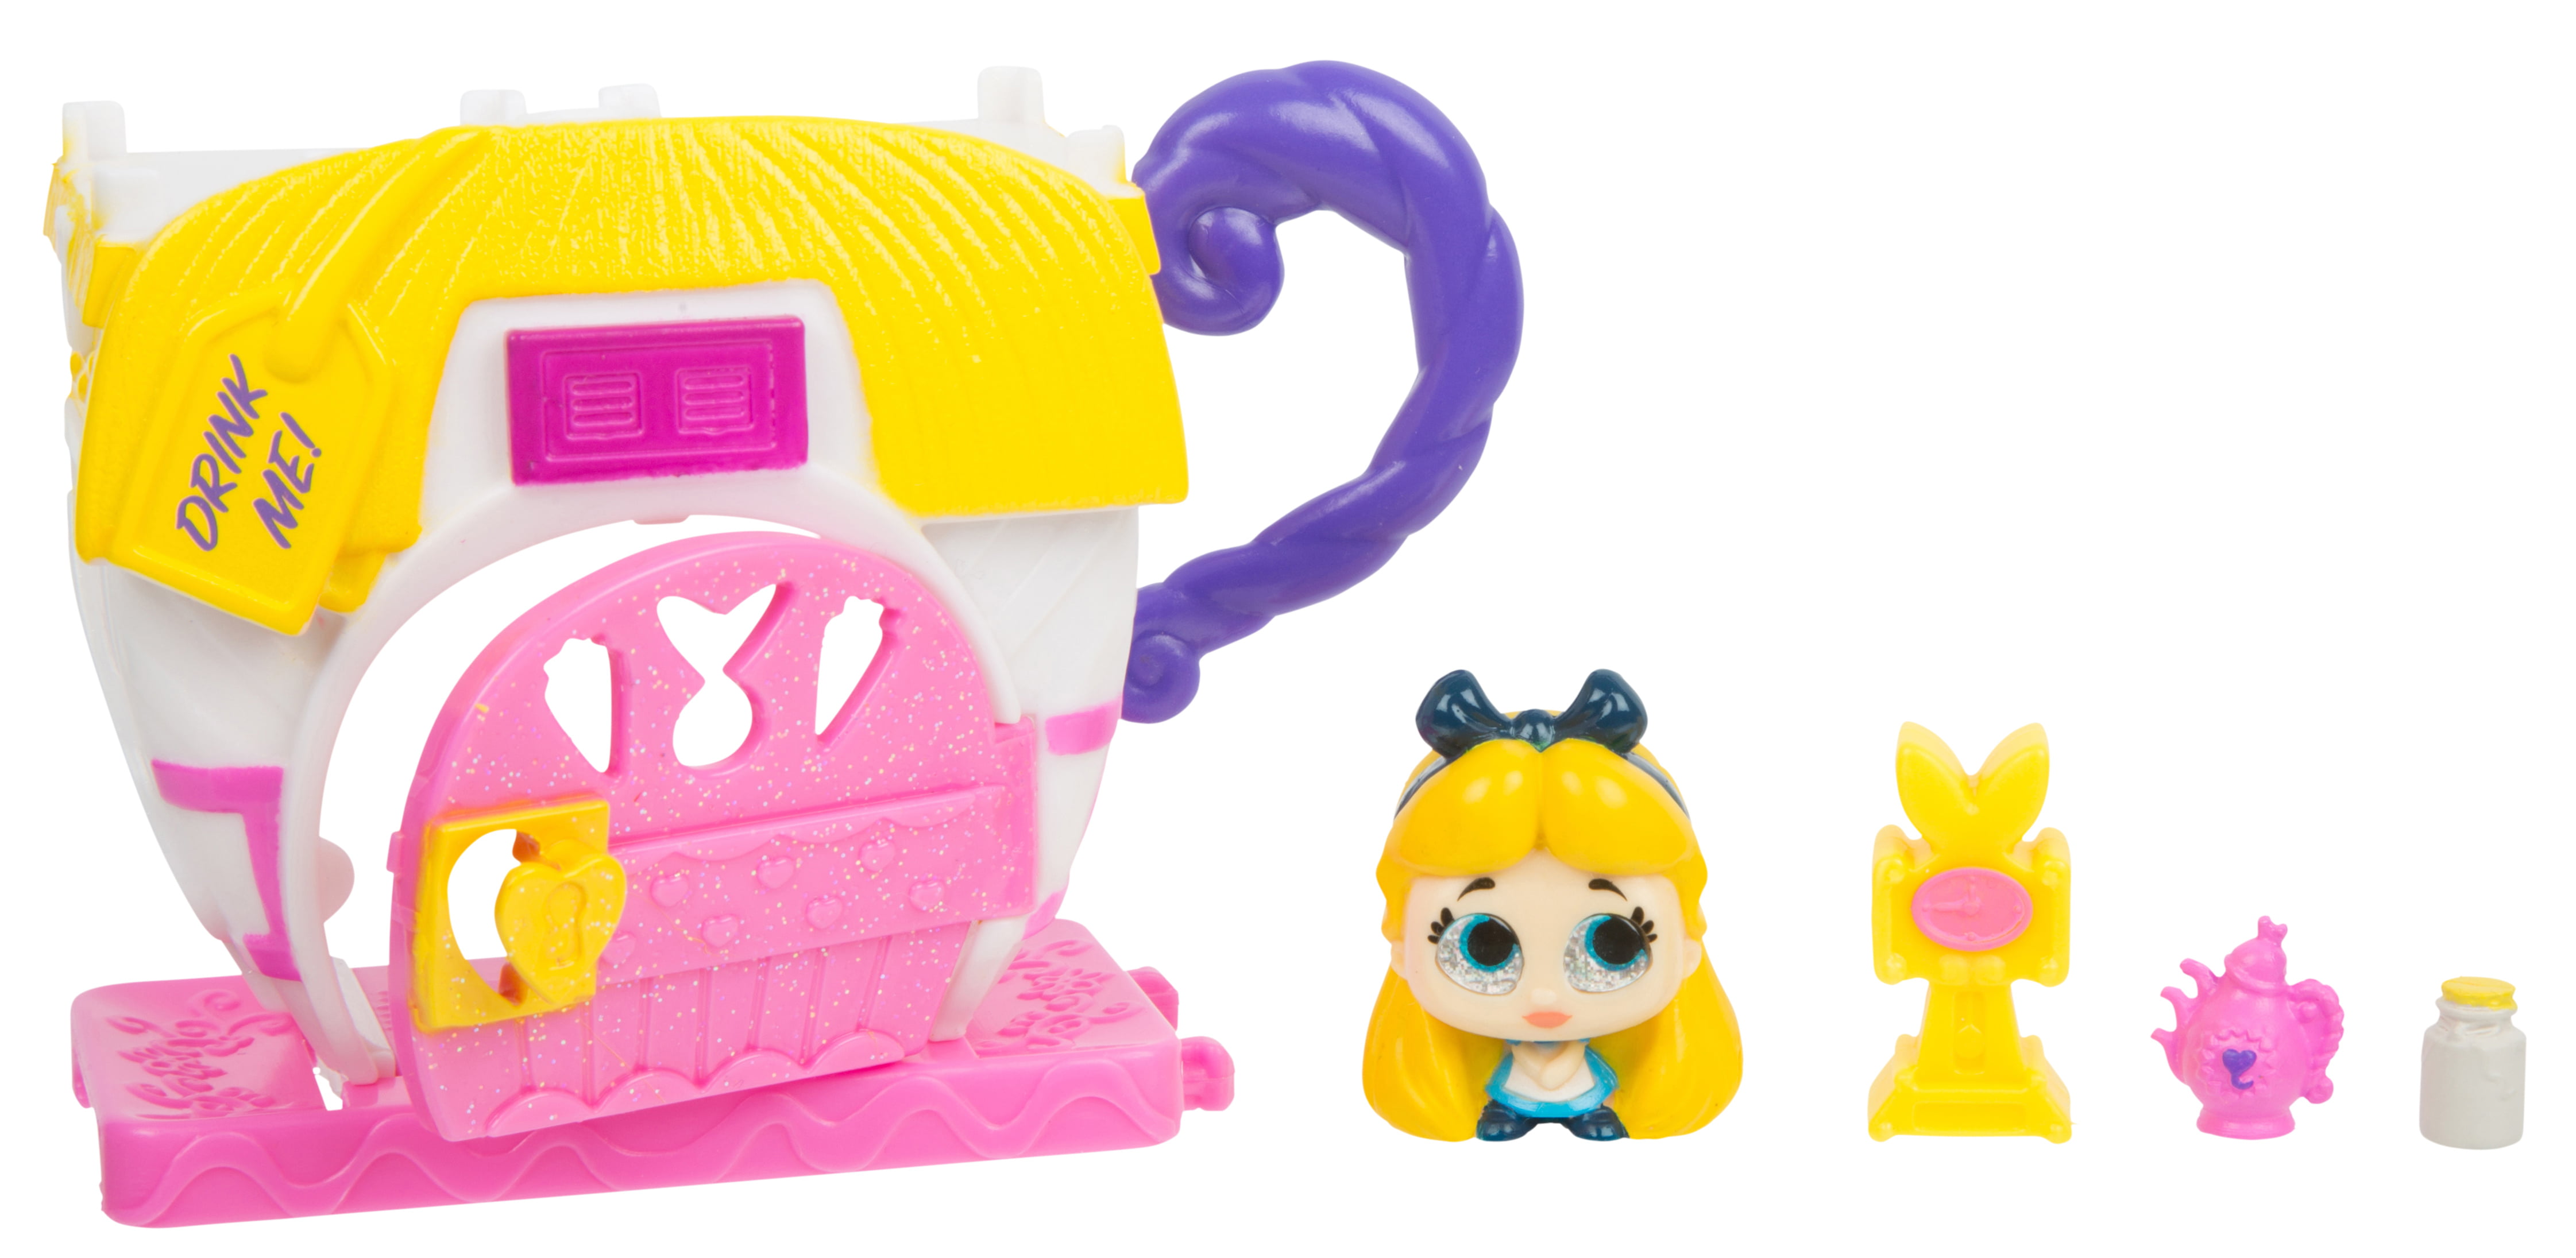 Disney Doorables Alice's Teacup Mini House Mix Match & Stack Surprise Figure New